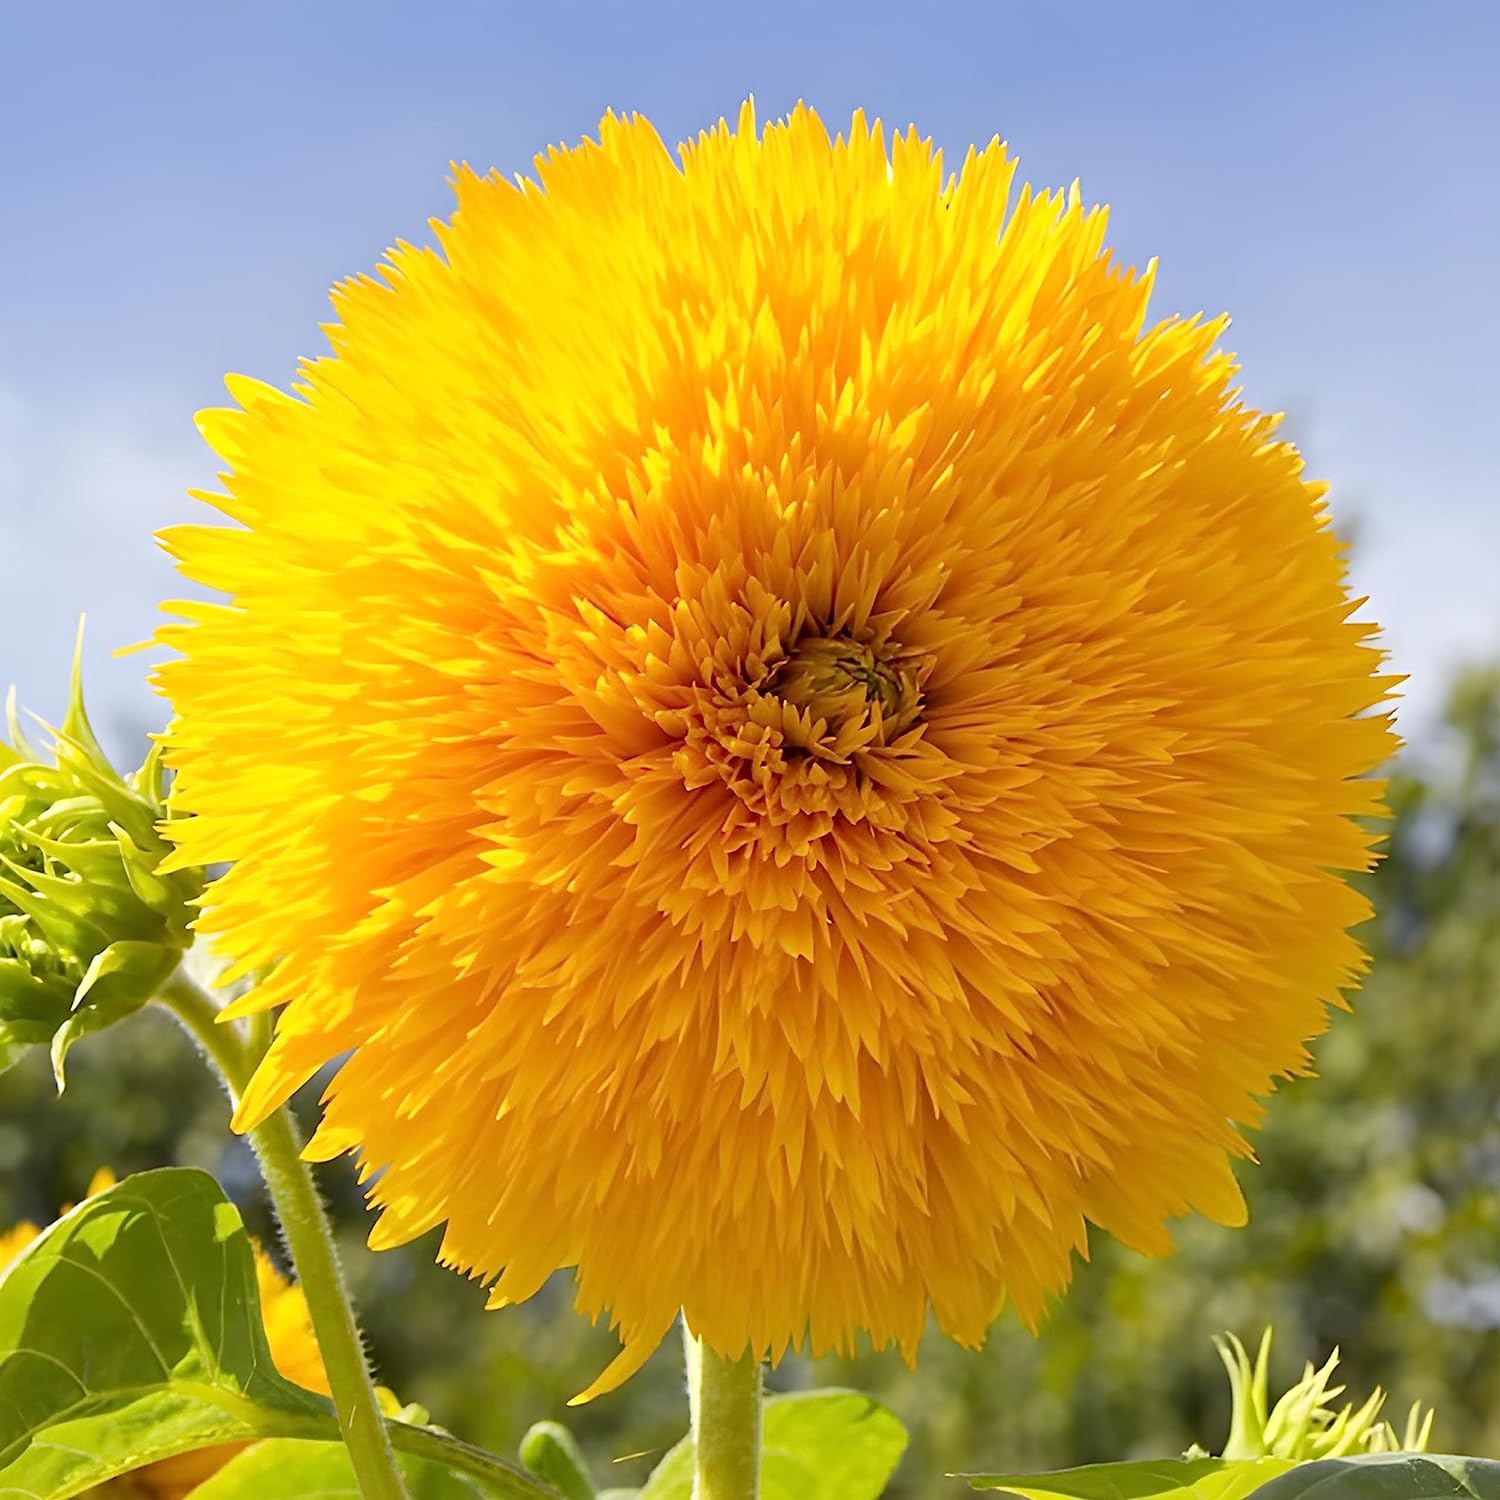 25 Teddy Bear Sunflower Seeds – Sunflower Seeds for Planting – Garden Plant – Sunflower Seeds – Garden Seed Sunflower Gifts – Non GMO Heirloom Sun Flower Seeds for Planting Outdoors